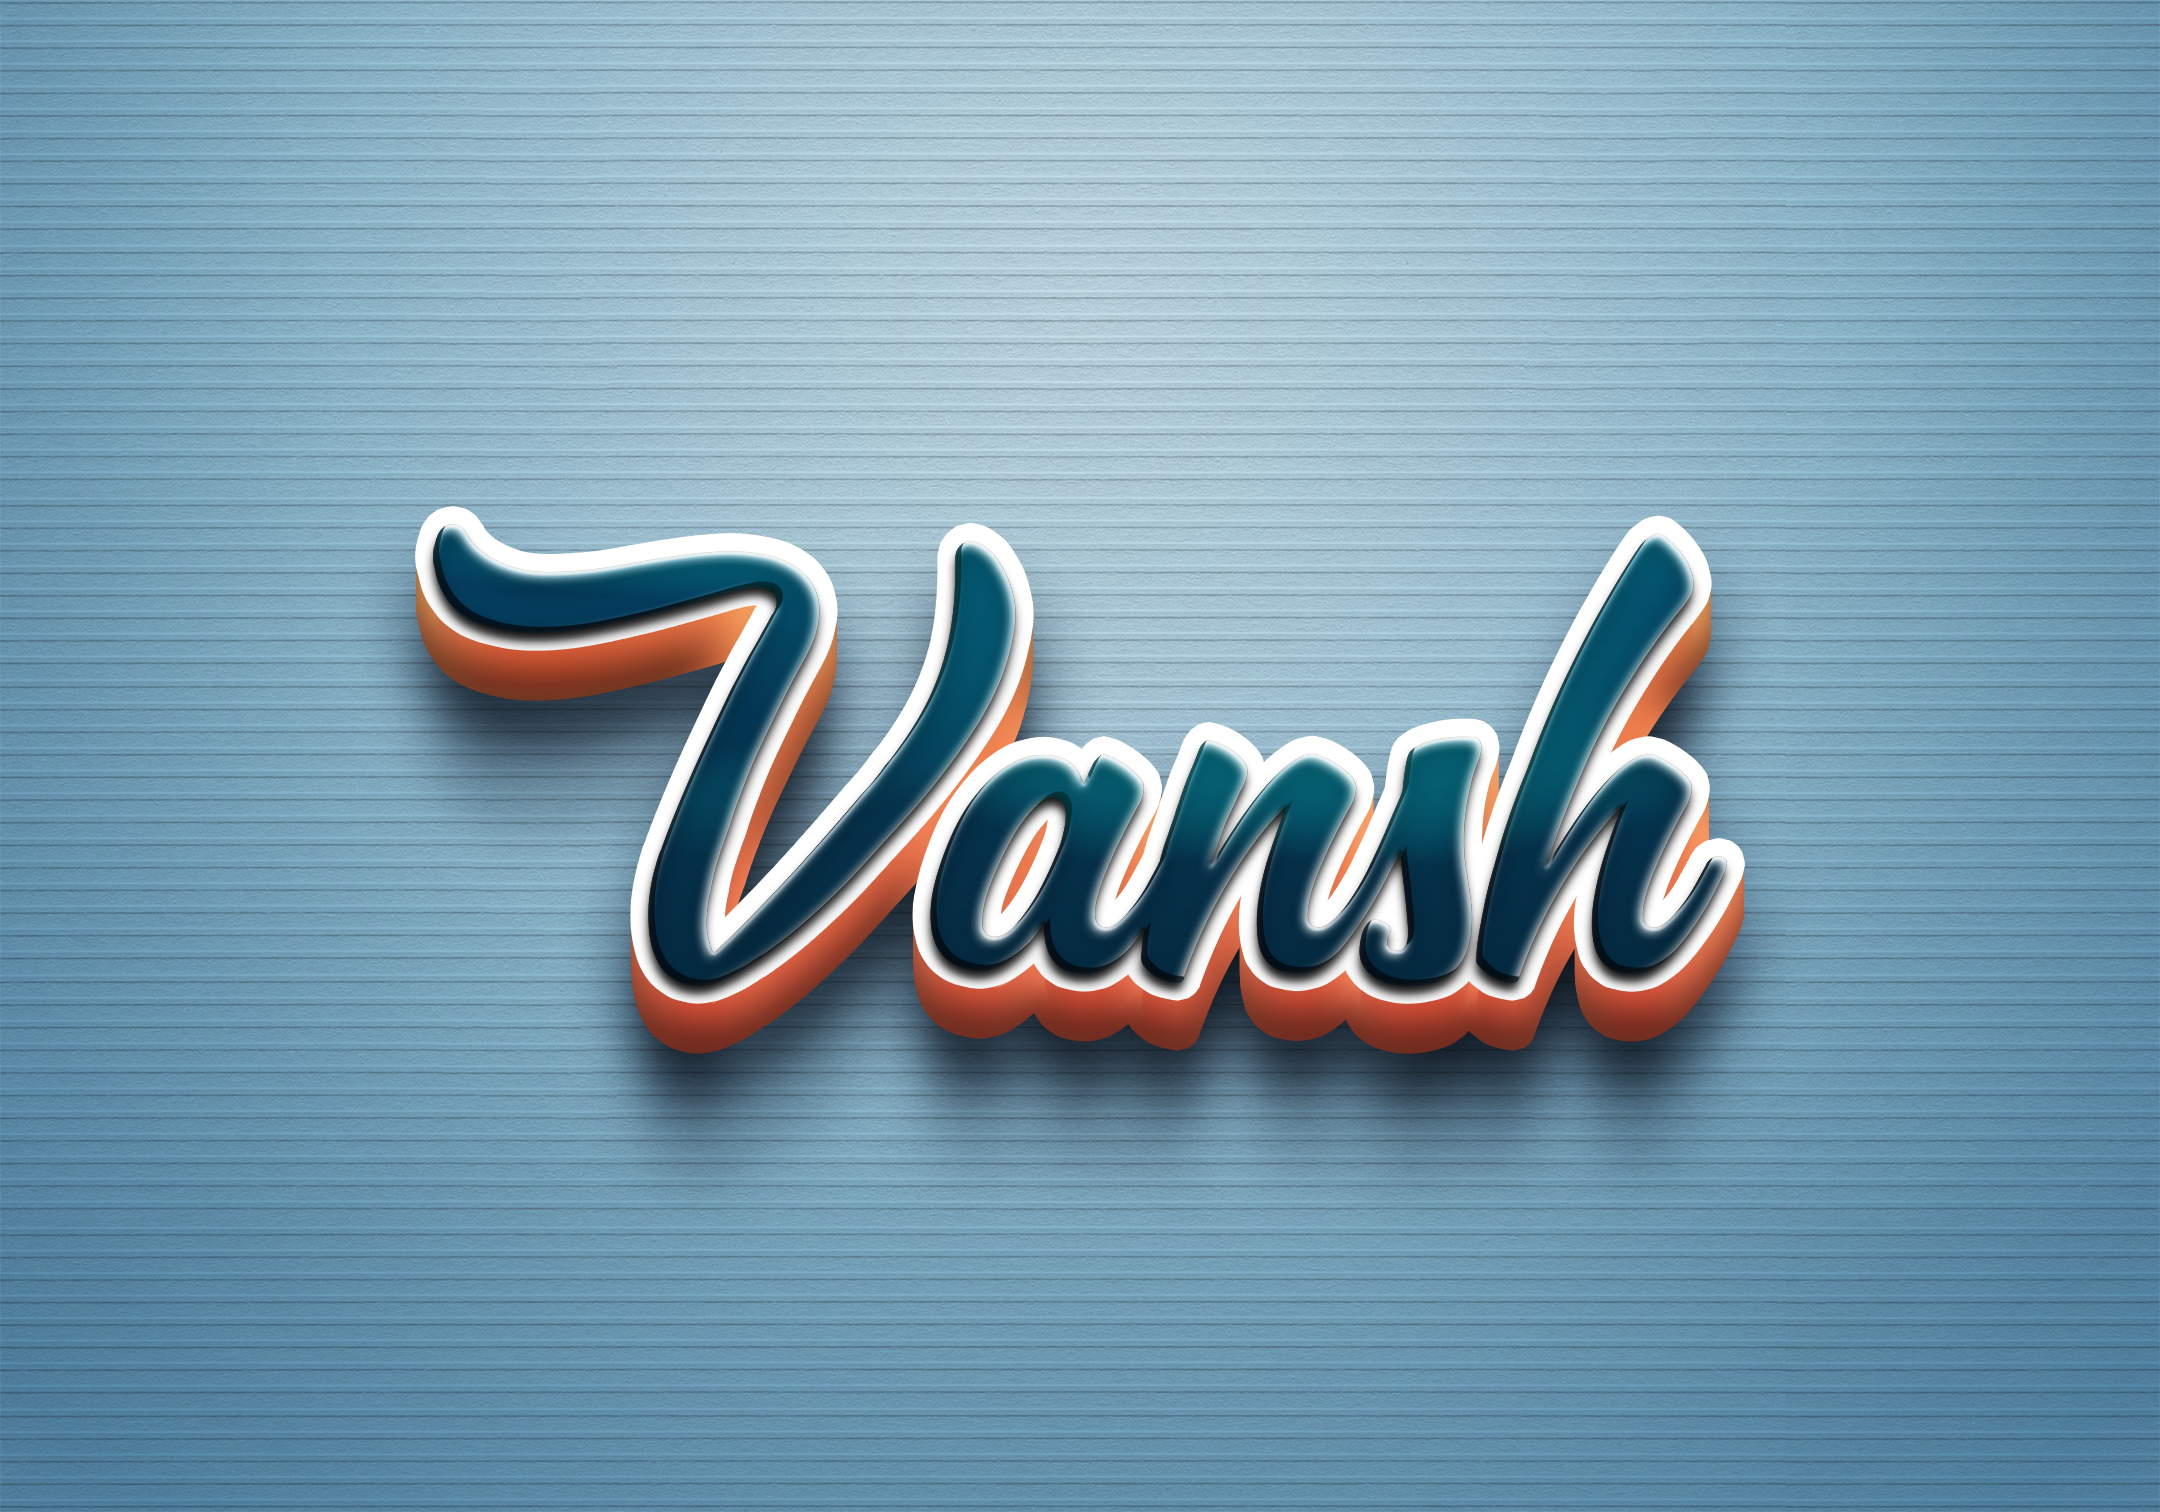 Vansh Logo Name Comment Your Name | #shorts #viralshorts #logo #logodesign  #viralshorts #art #name - YouTube